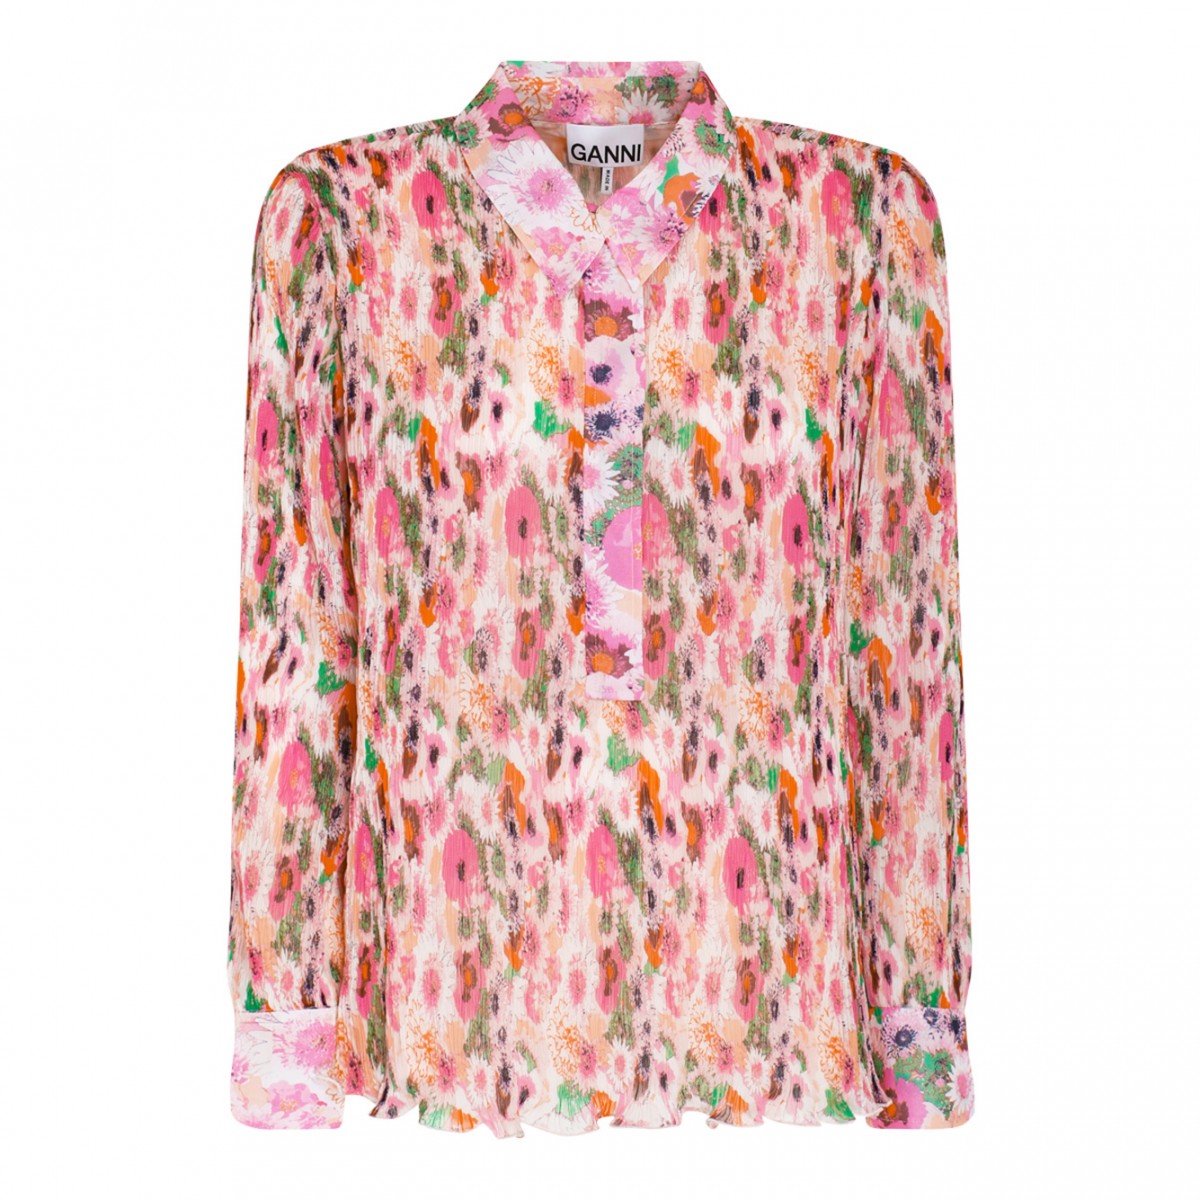 Ganni Sugar Plum Floral Print Shirt.